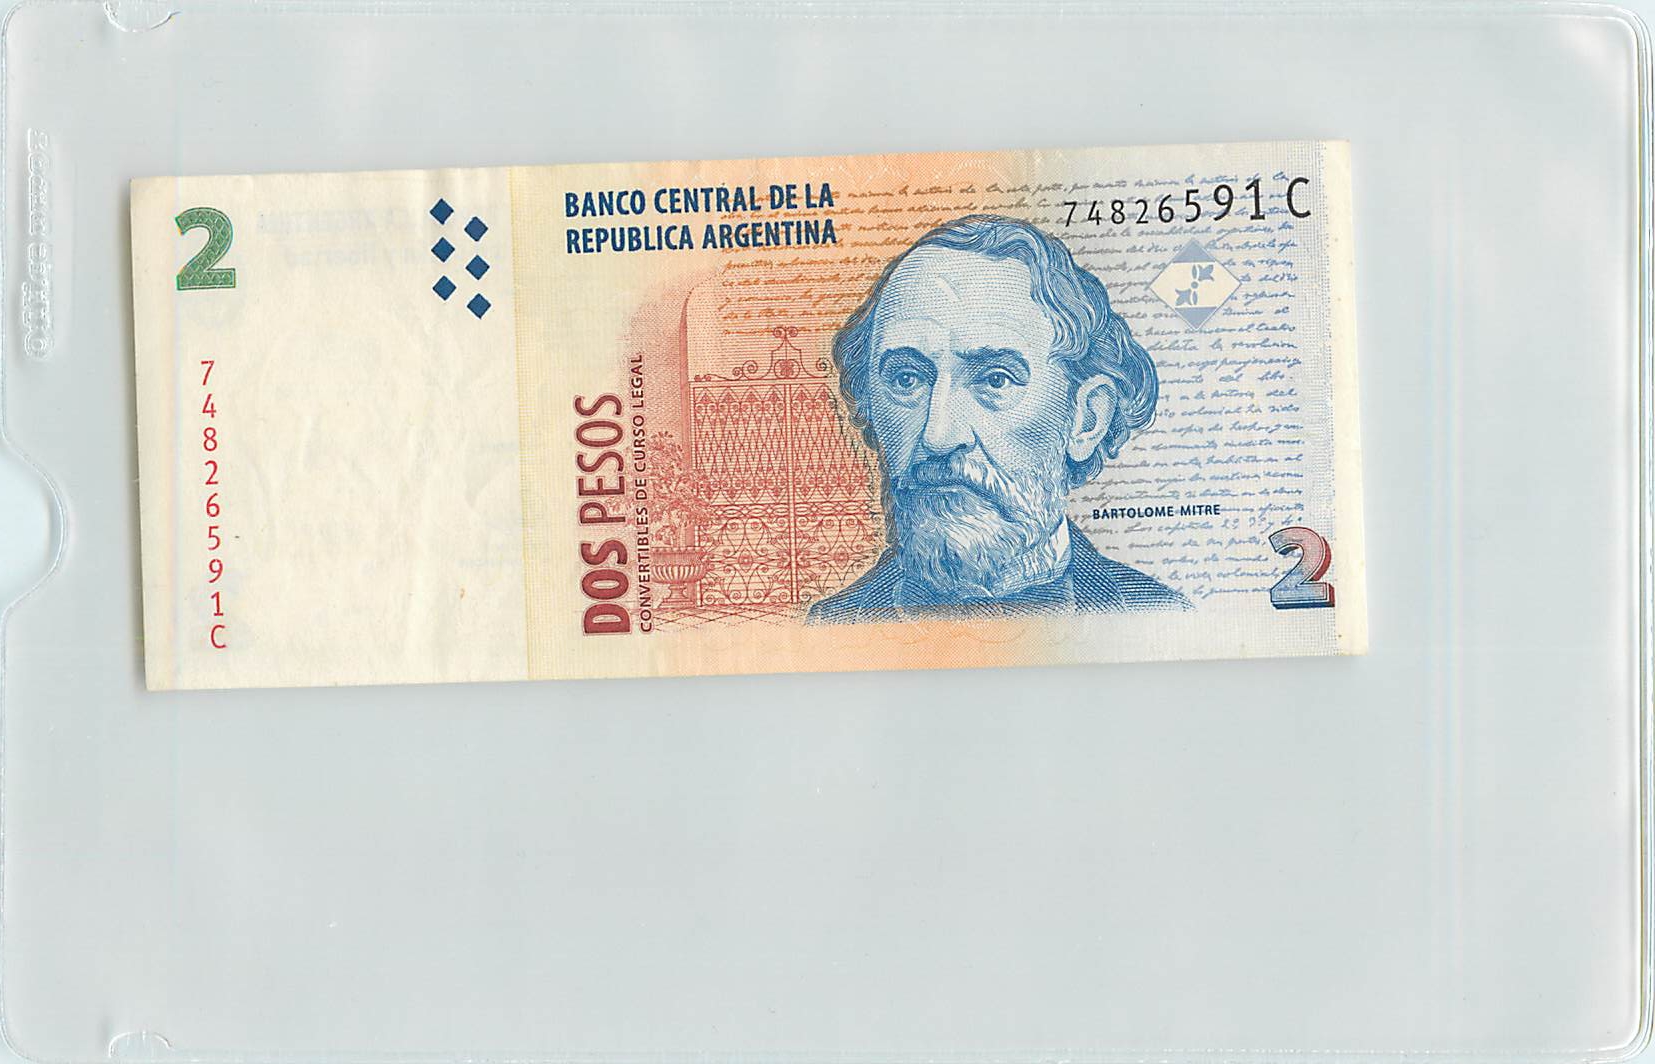 Argentina Dos Pesos 2002  Bartolome Mitre front2015_08_11_11_43_250001.jpg